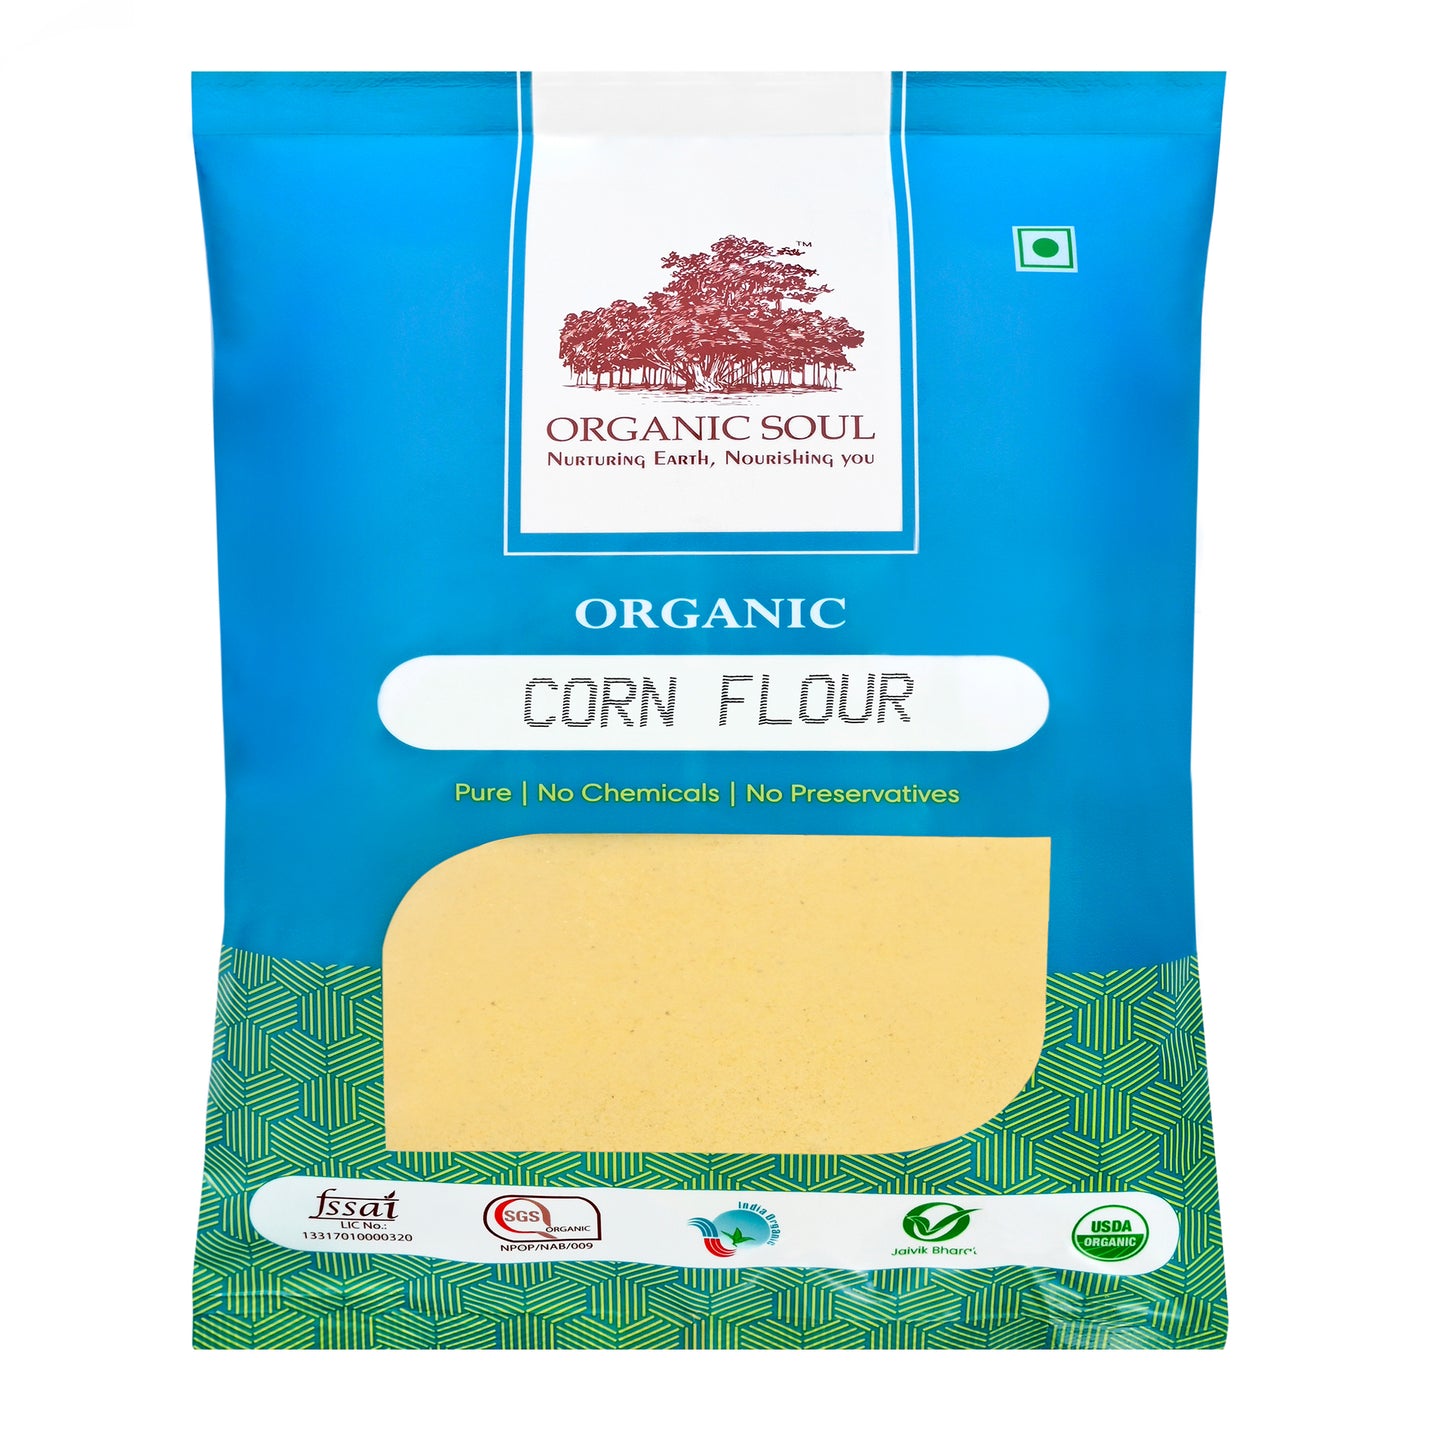 Organic Cornflour (Makki Atta, Corn Flour, Maize Flour) - (450 gm or 900 gm) | 100% Organic